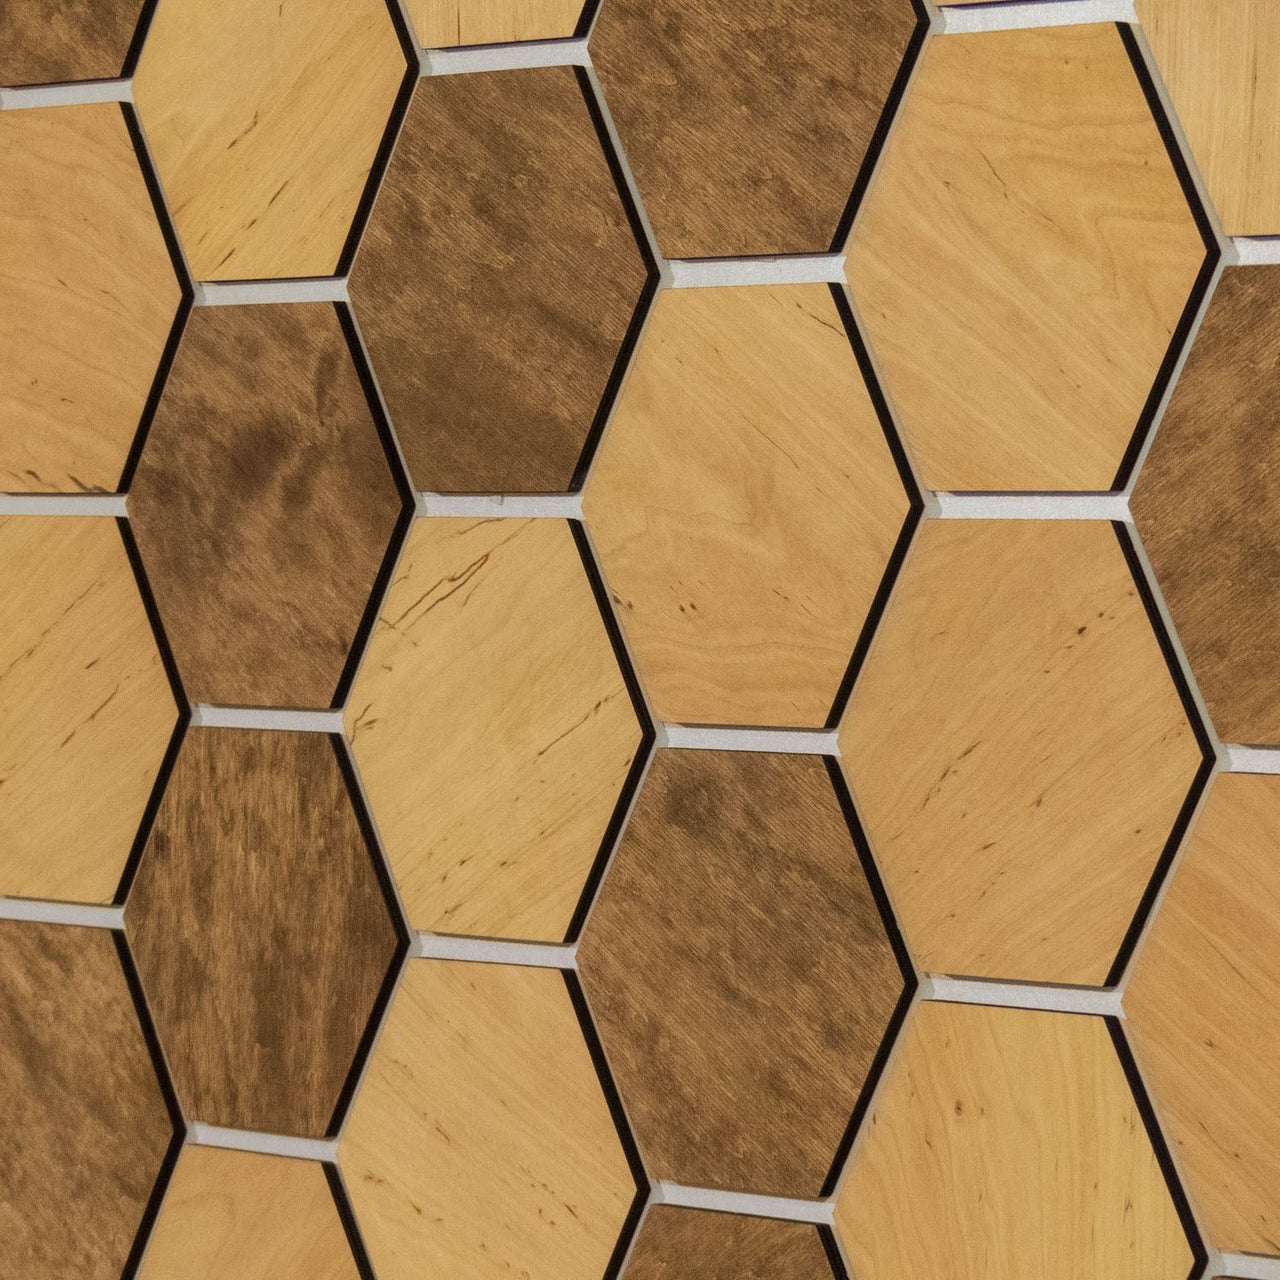 Medium and Light Hexagon Wooden Wall Panels by Hexagonica